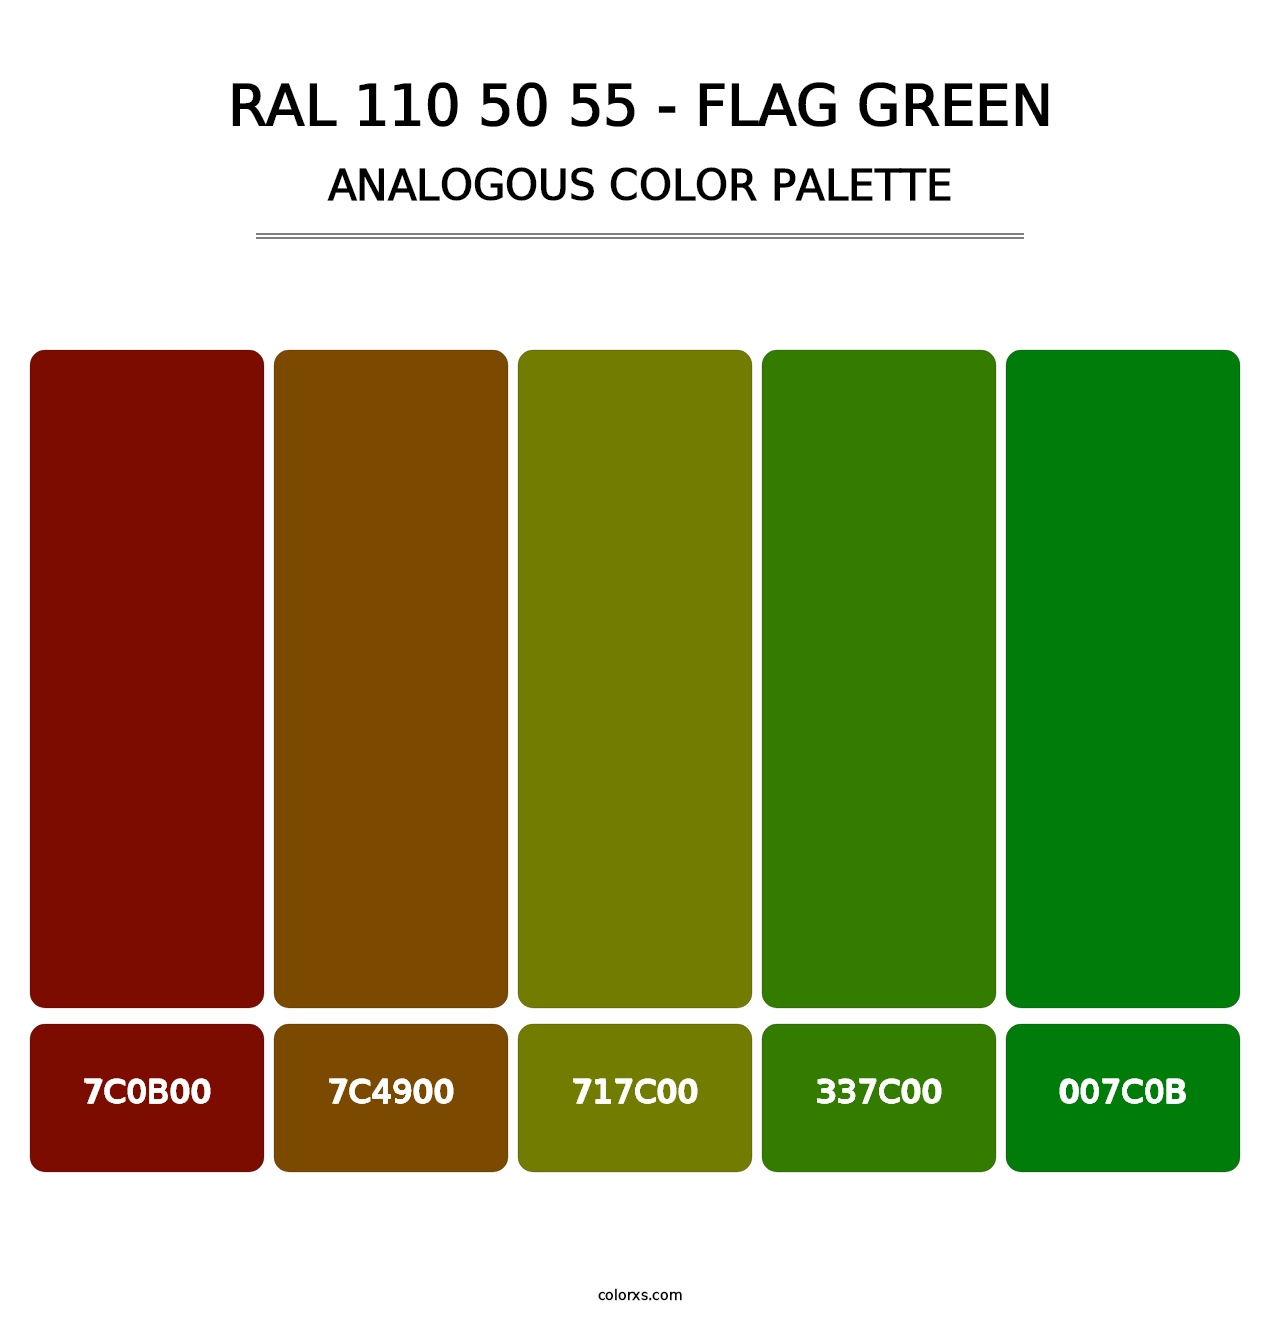 RAL 110 50 55 - Flag Green - Analogous Color Palette